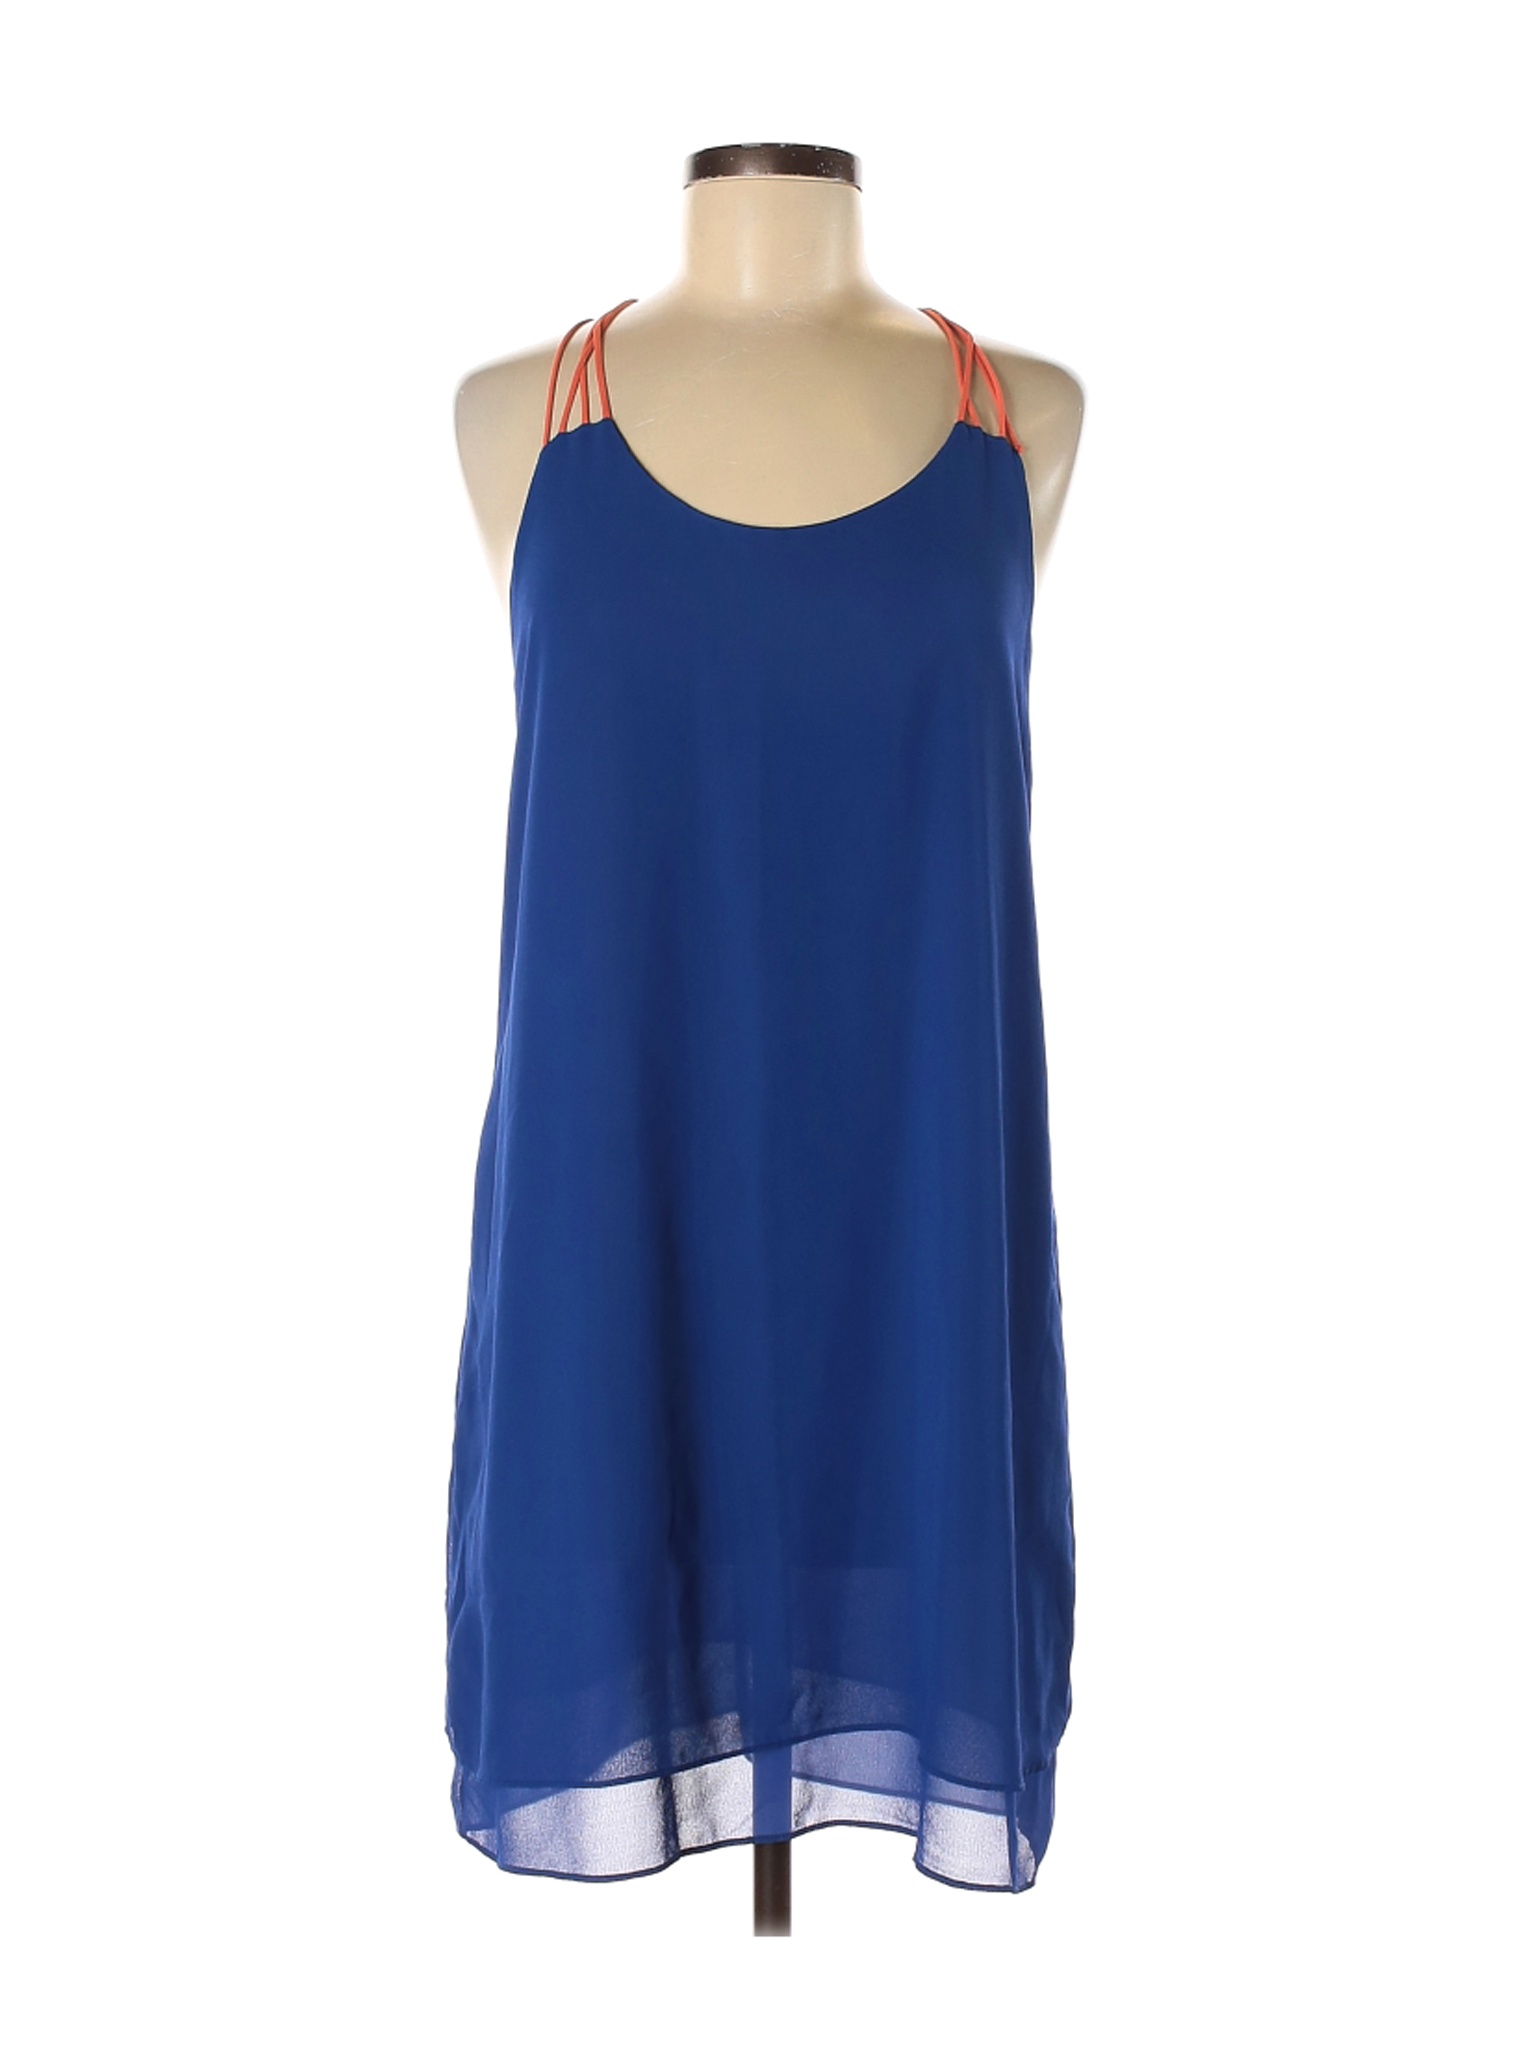 Umgee Women Blue Sleeveless Blouse M | eBay